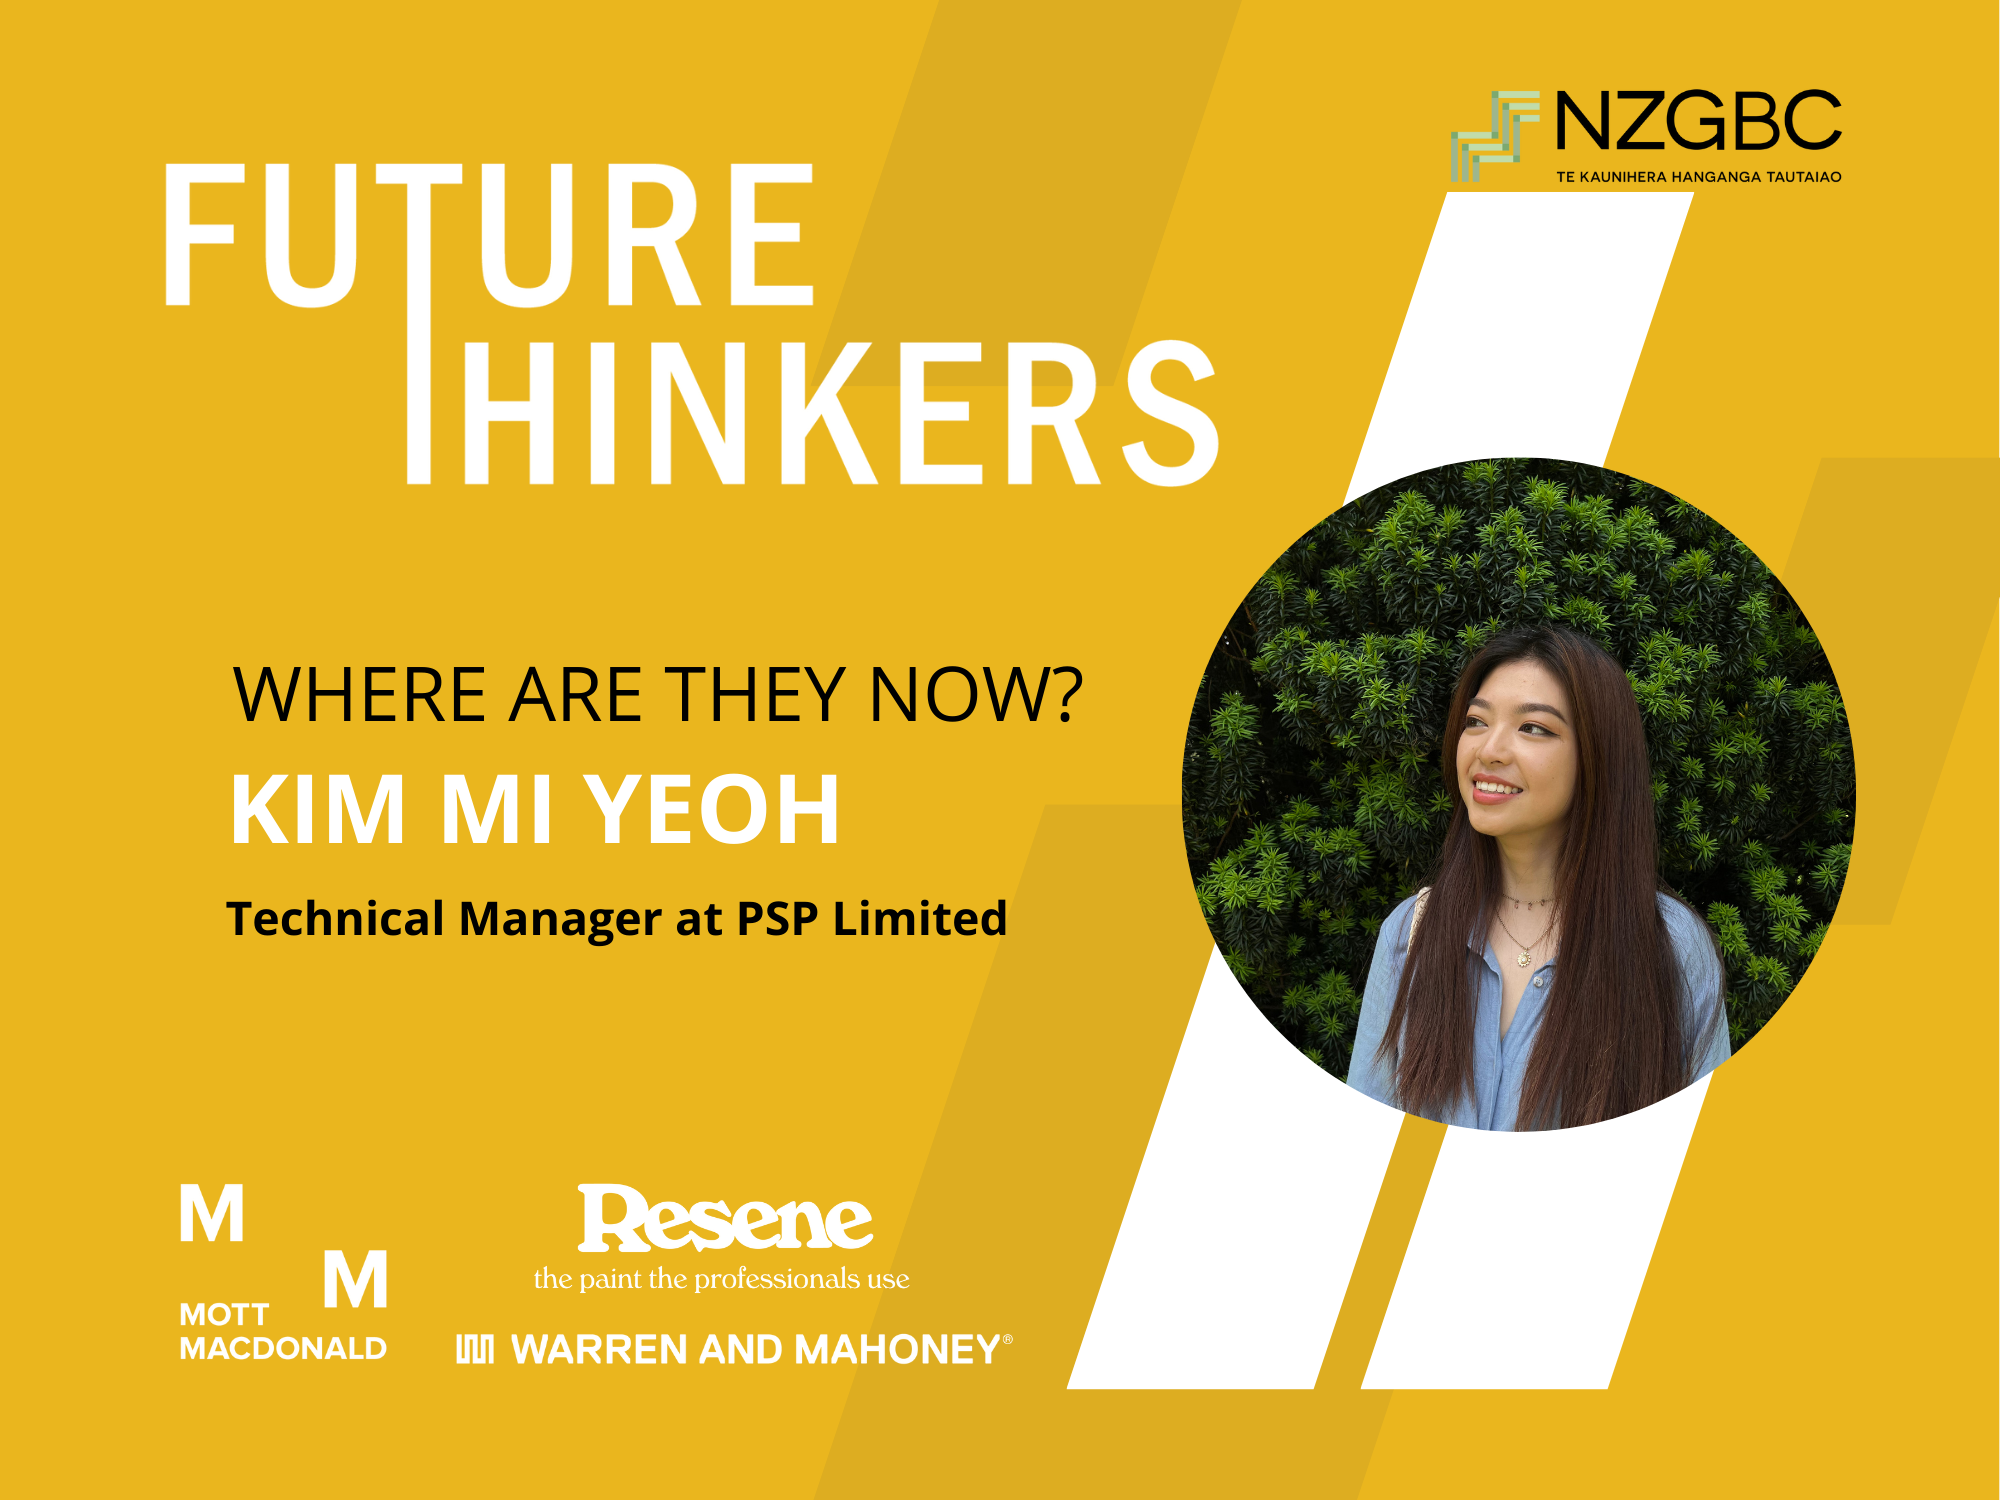 NZGBC Future Thinkers - Where Are They Now? - Kim Mi Yeoh